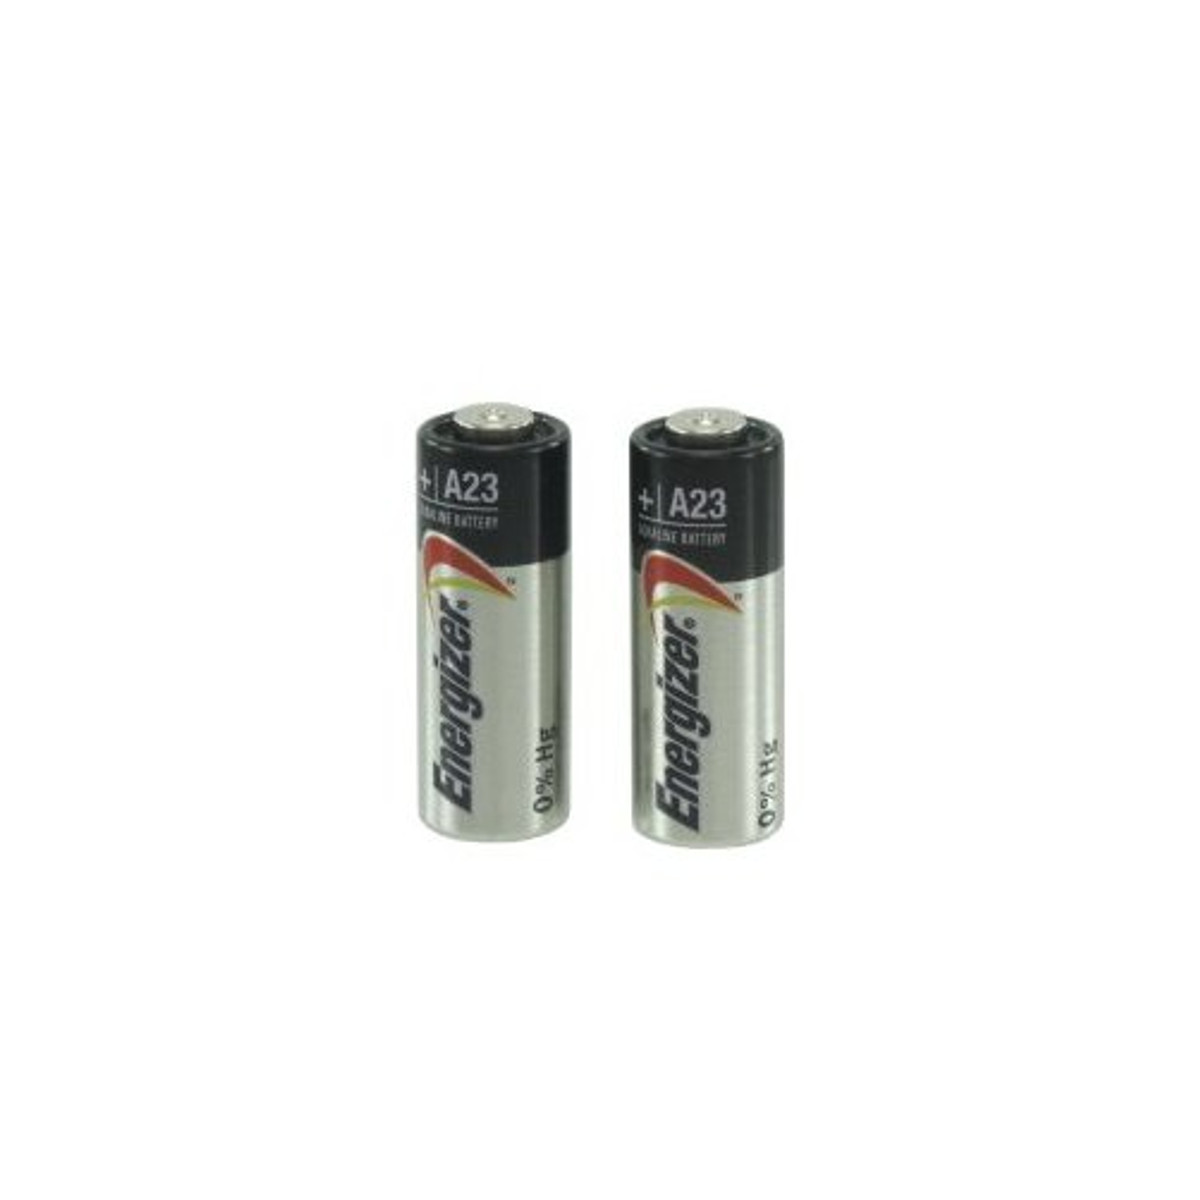 12-Volt Batteries (Pack of 2) (A23) - Greschlers Hardware